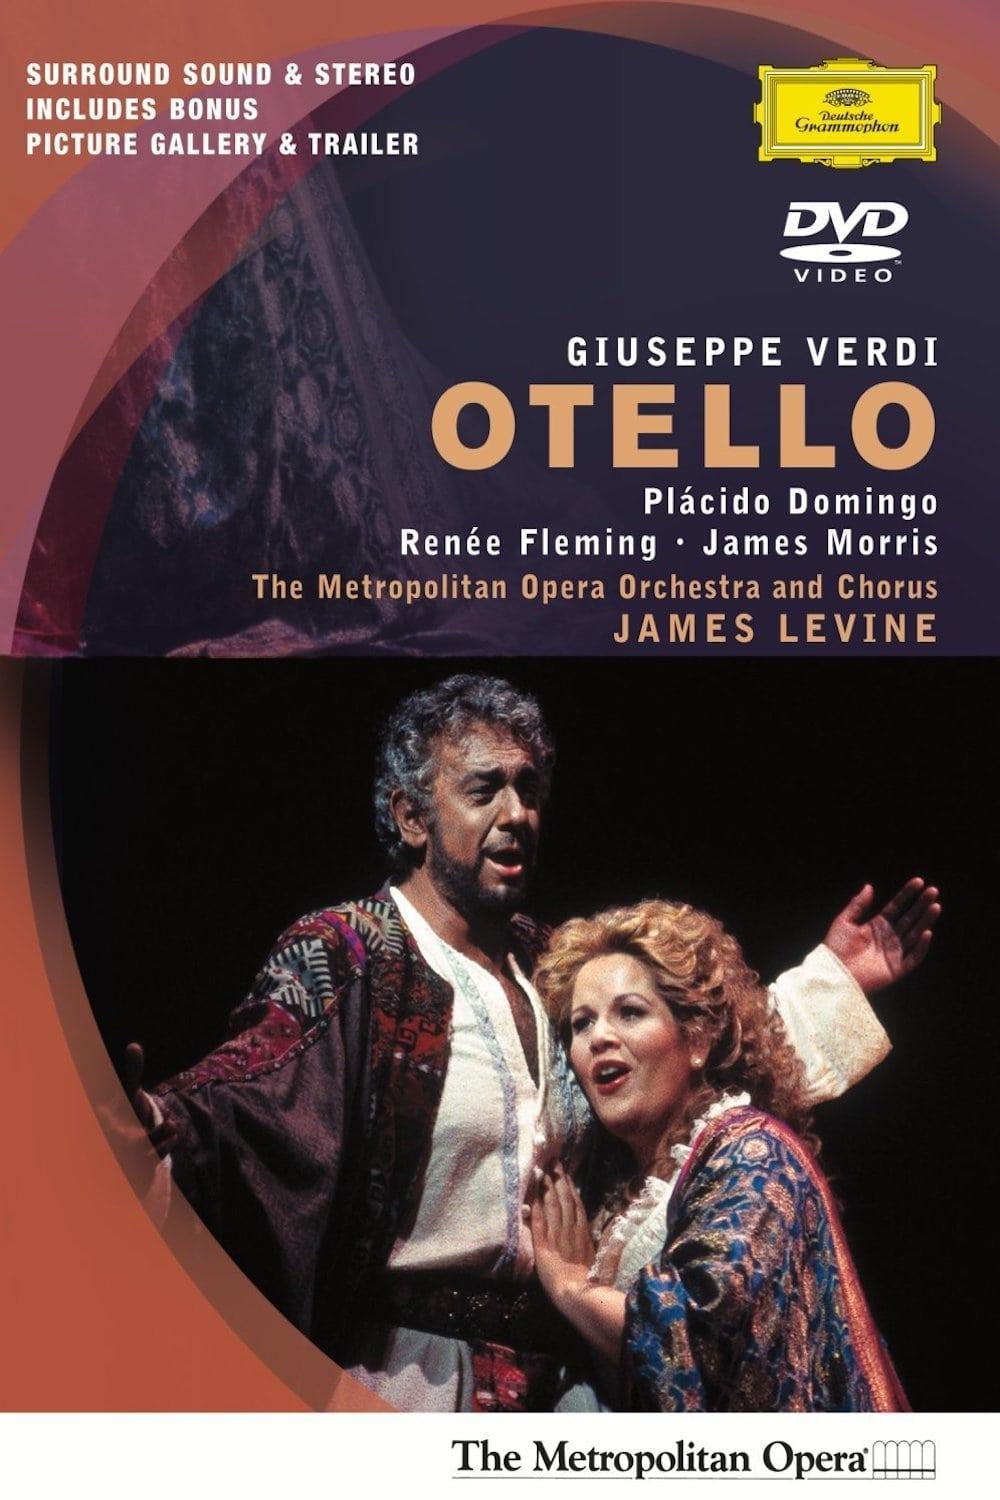 Otello poster